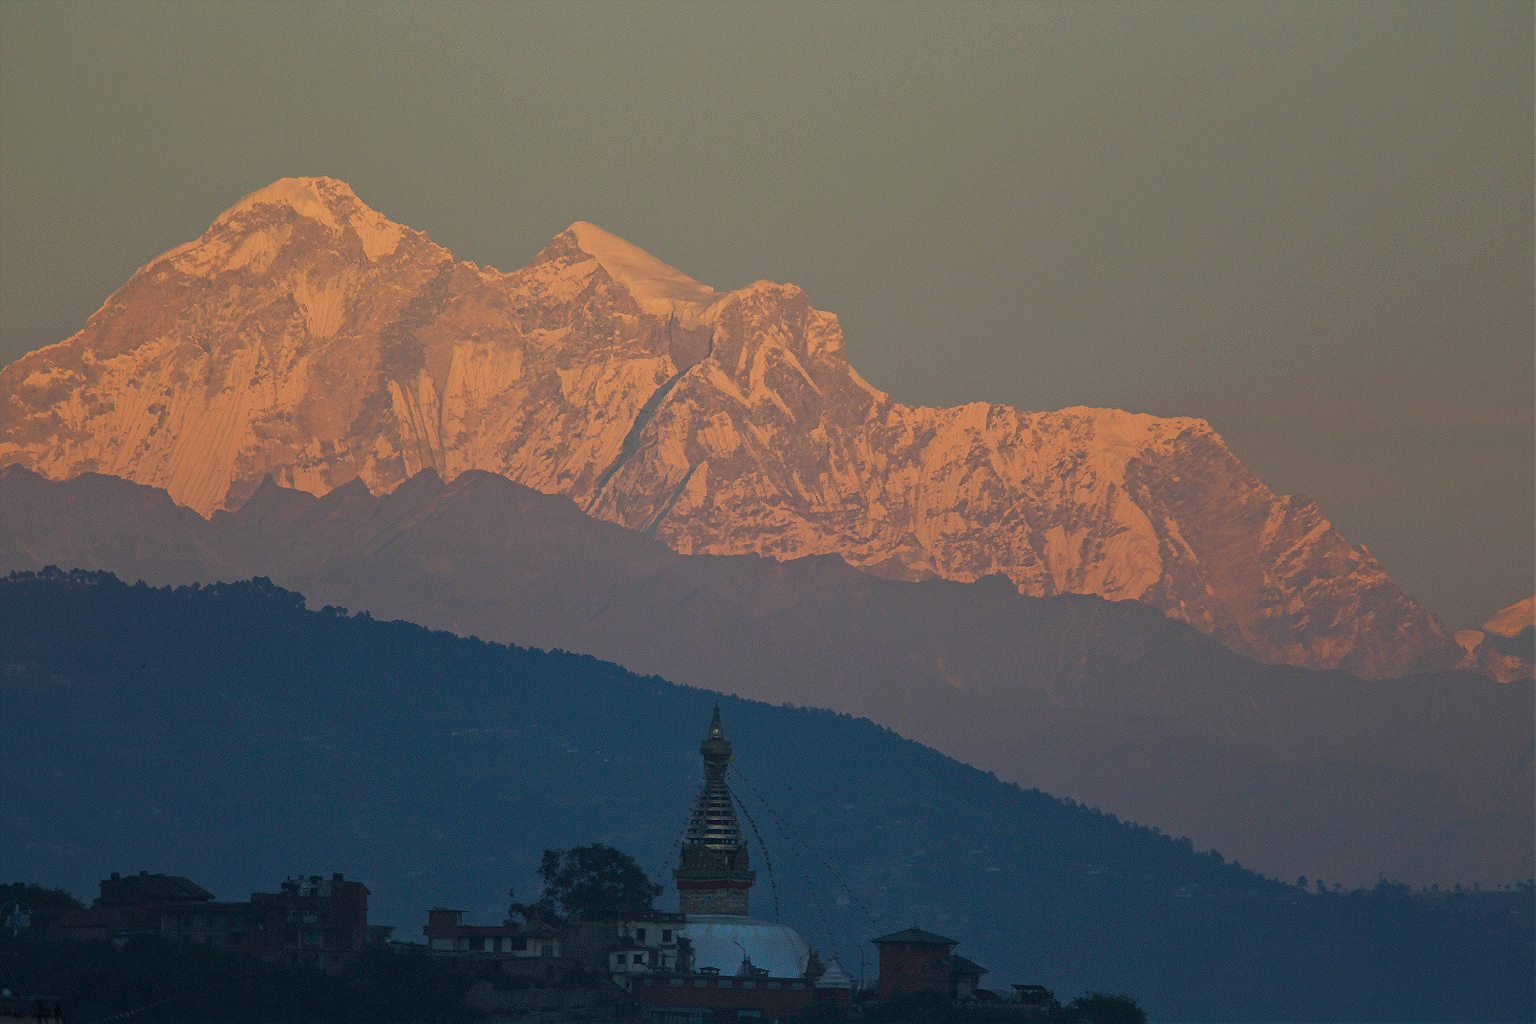 kathmandu travel guidelines